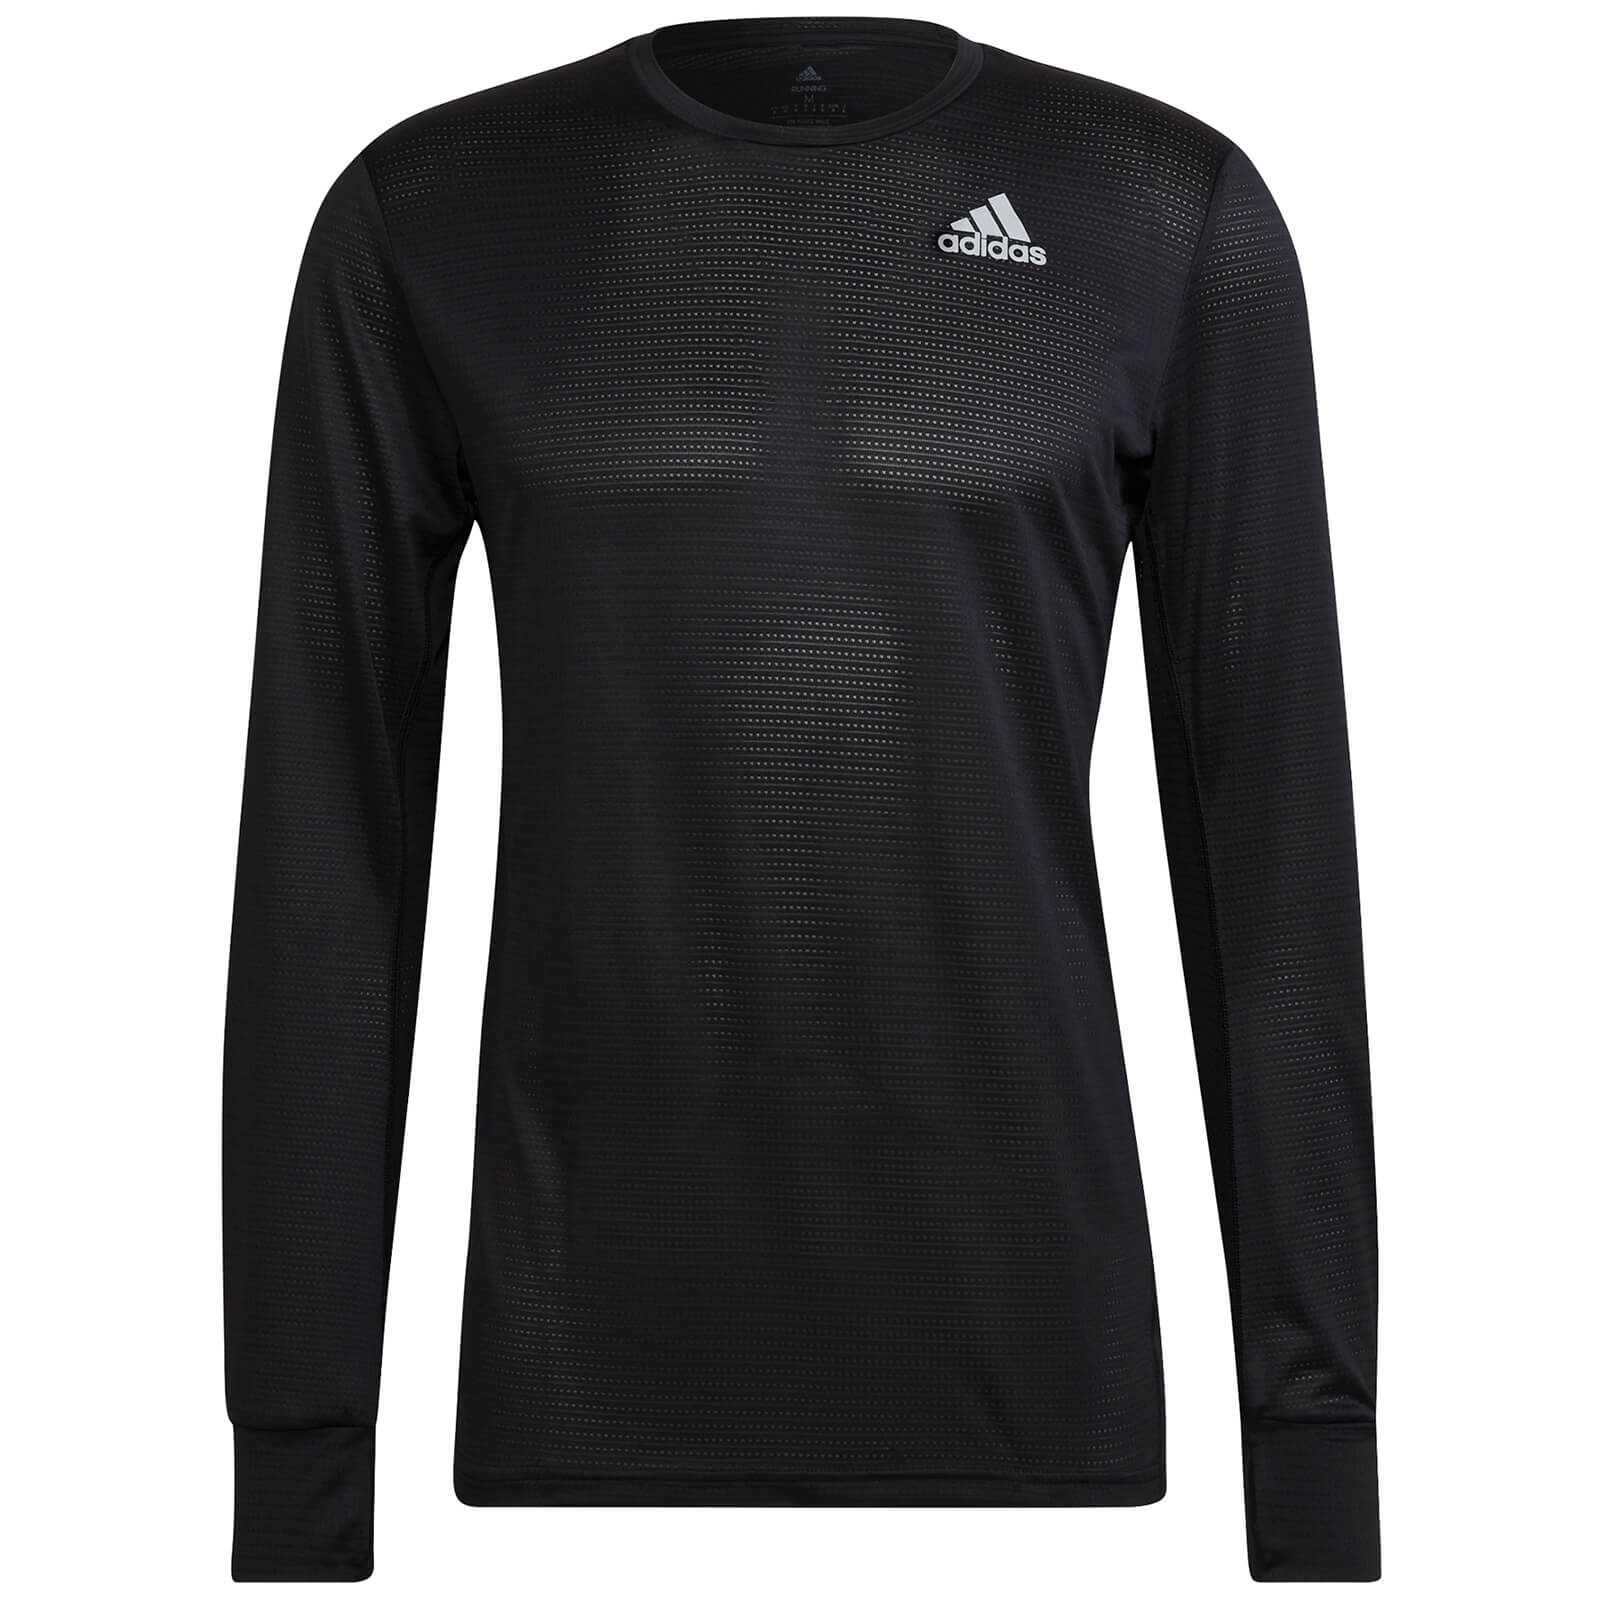 Image of adidas Own The Run Long Sleeve T-Shirt - Black/Reflective Silver - XL